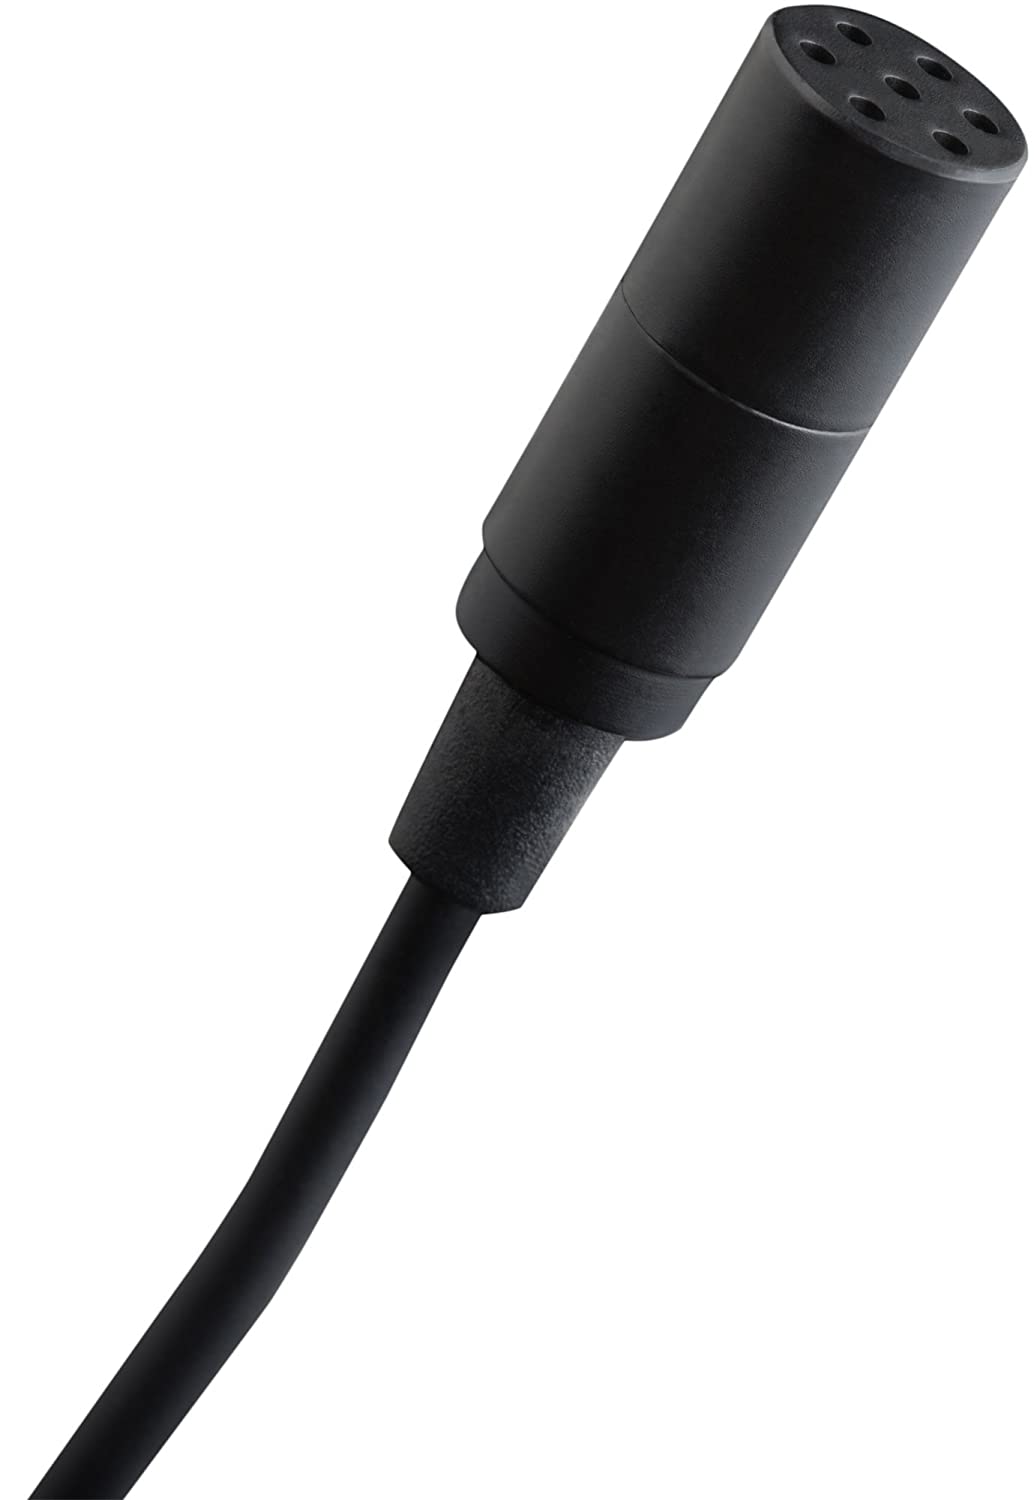 Sennheiser Clip-on microphone for IOS Devices